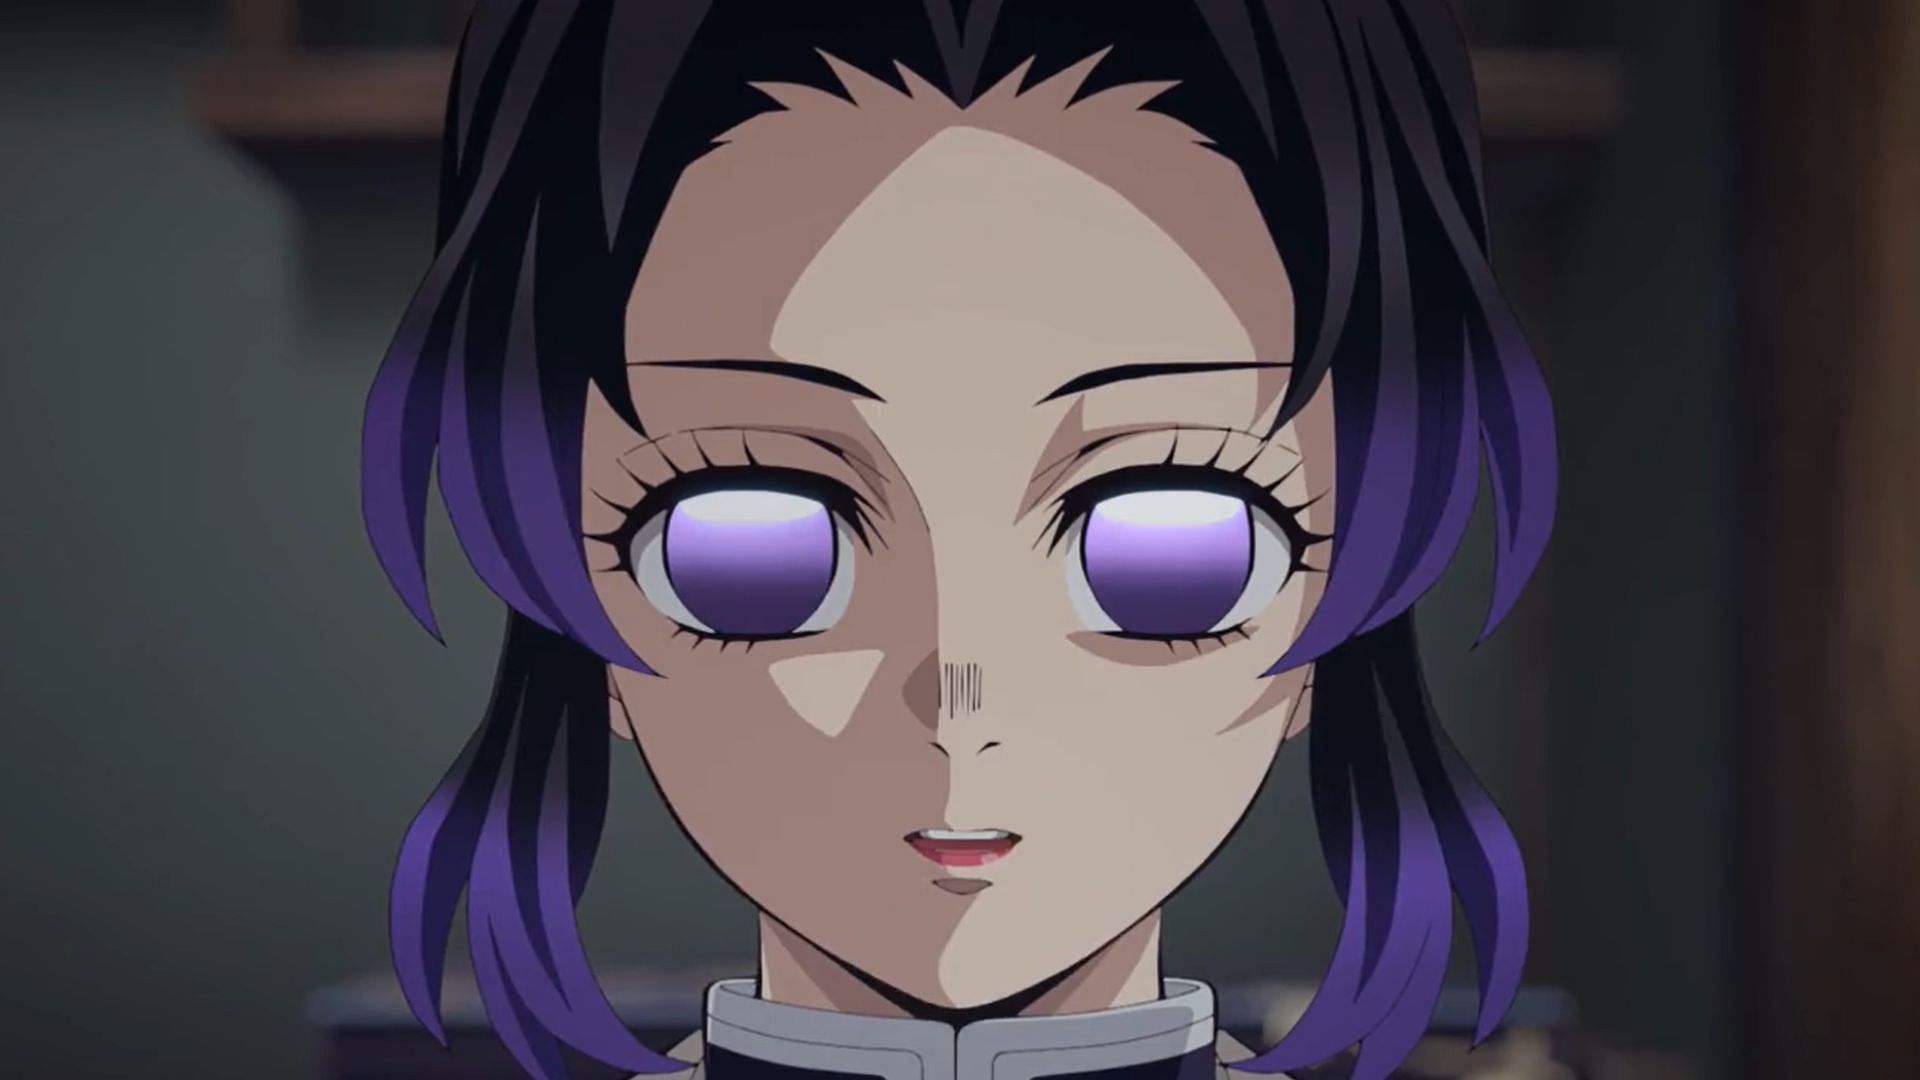 Shinobu Kochou as seen in the Demon Slayer anime (Image via Ufotable)